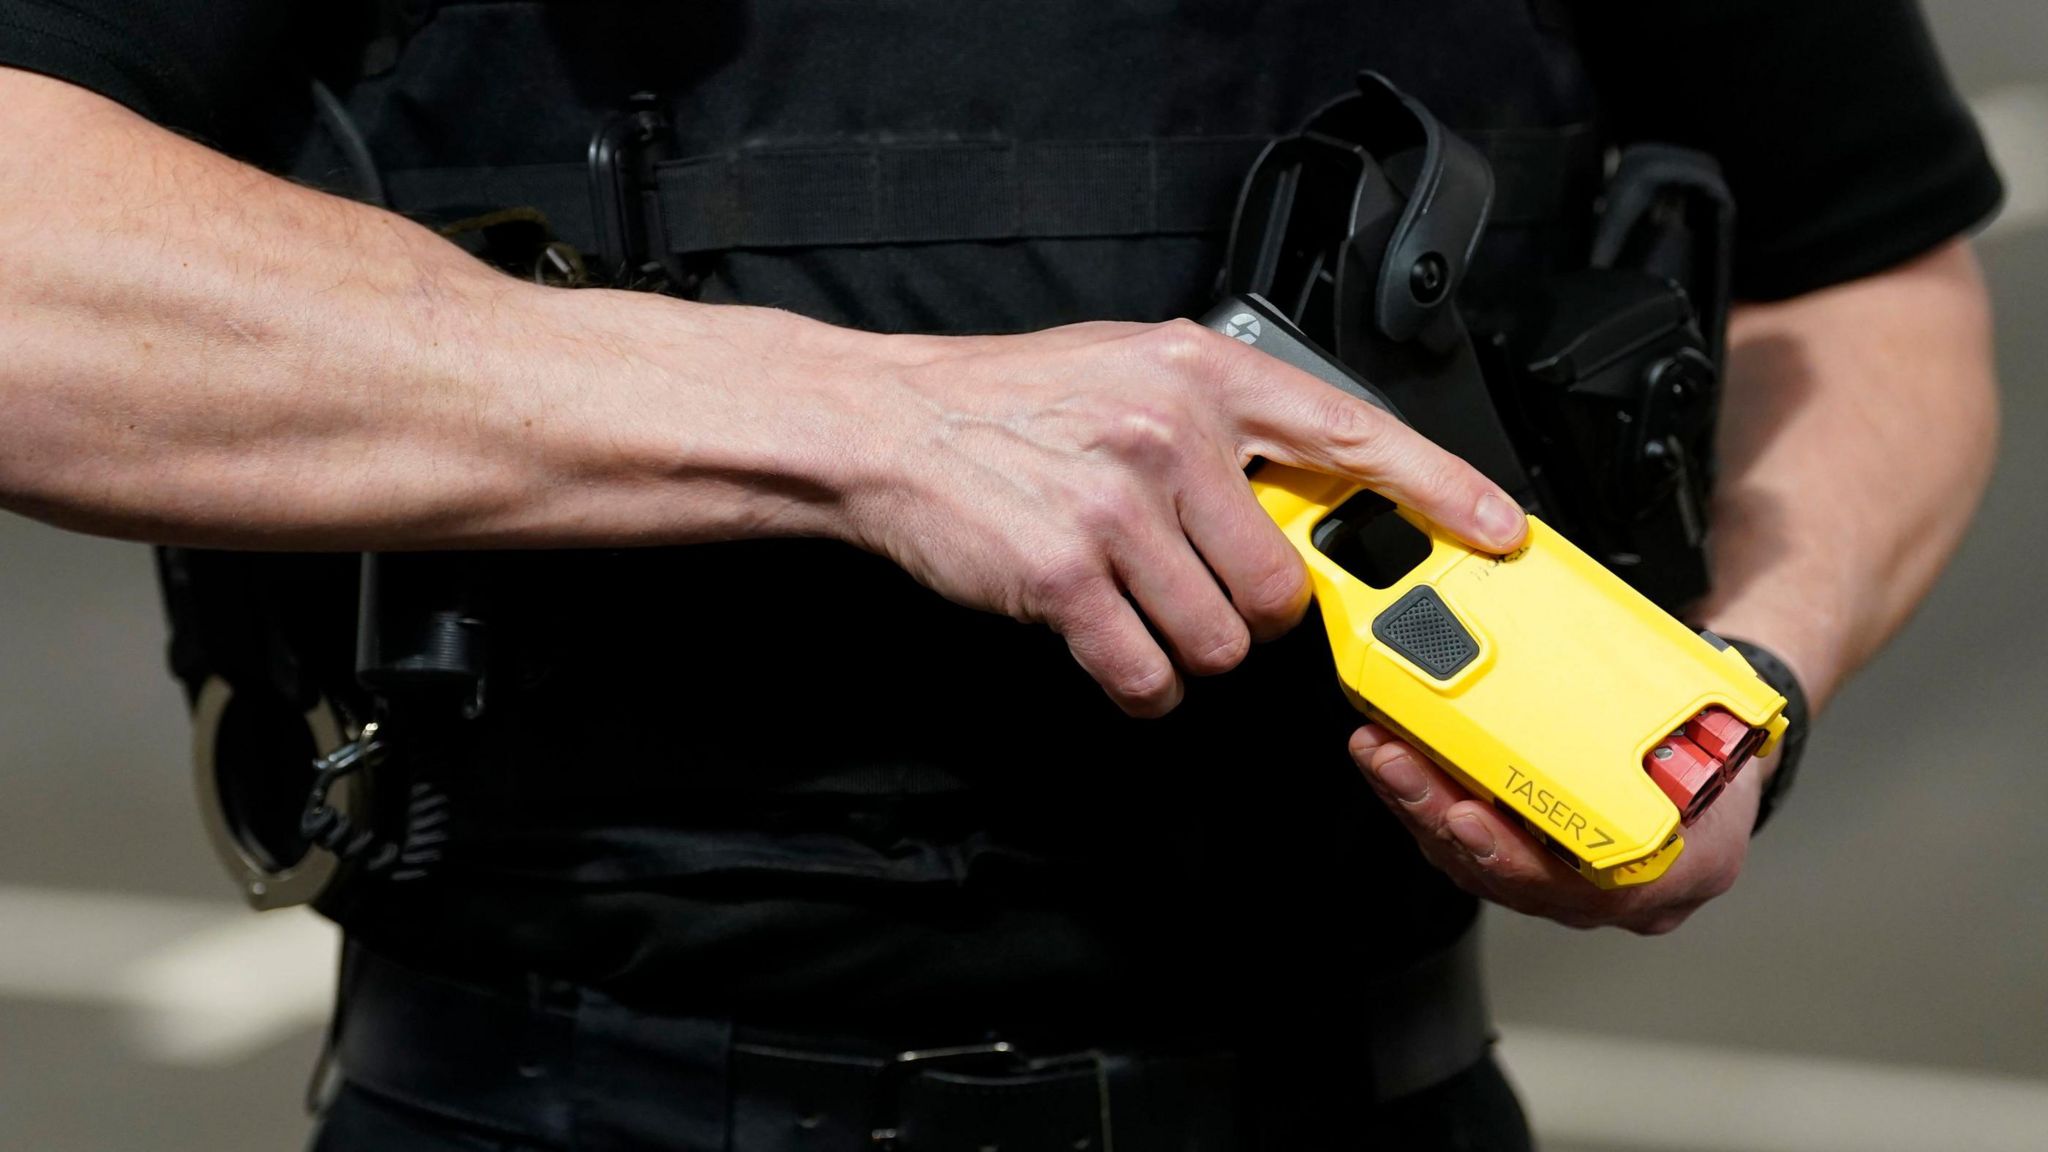 A police officer holding a Taser